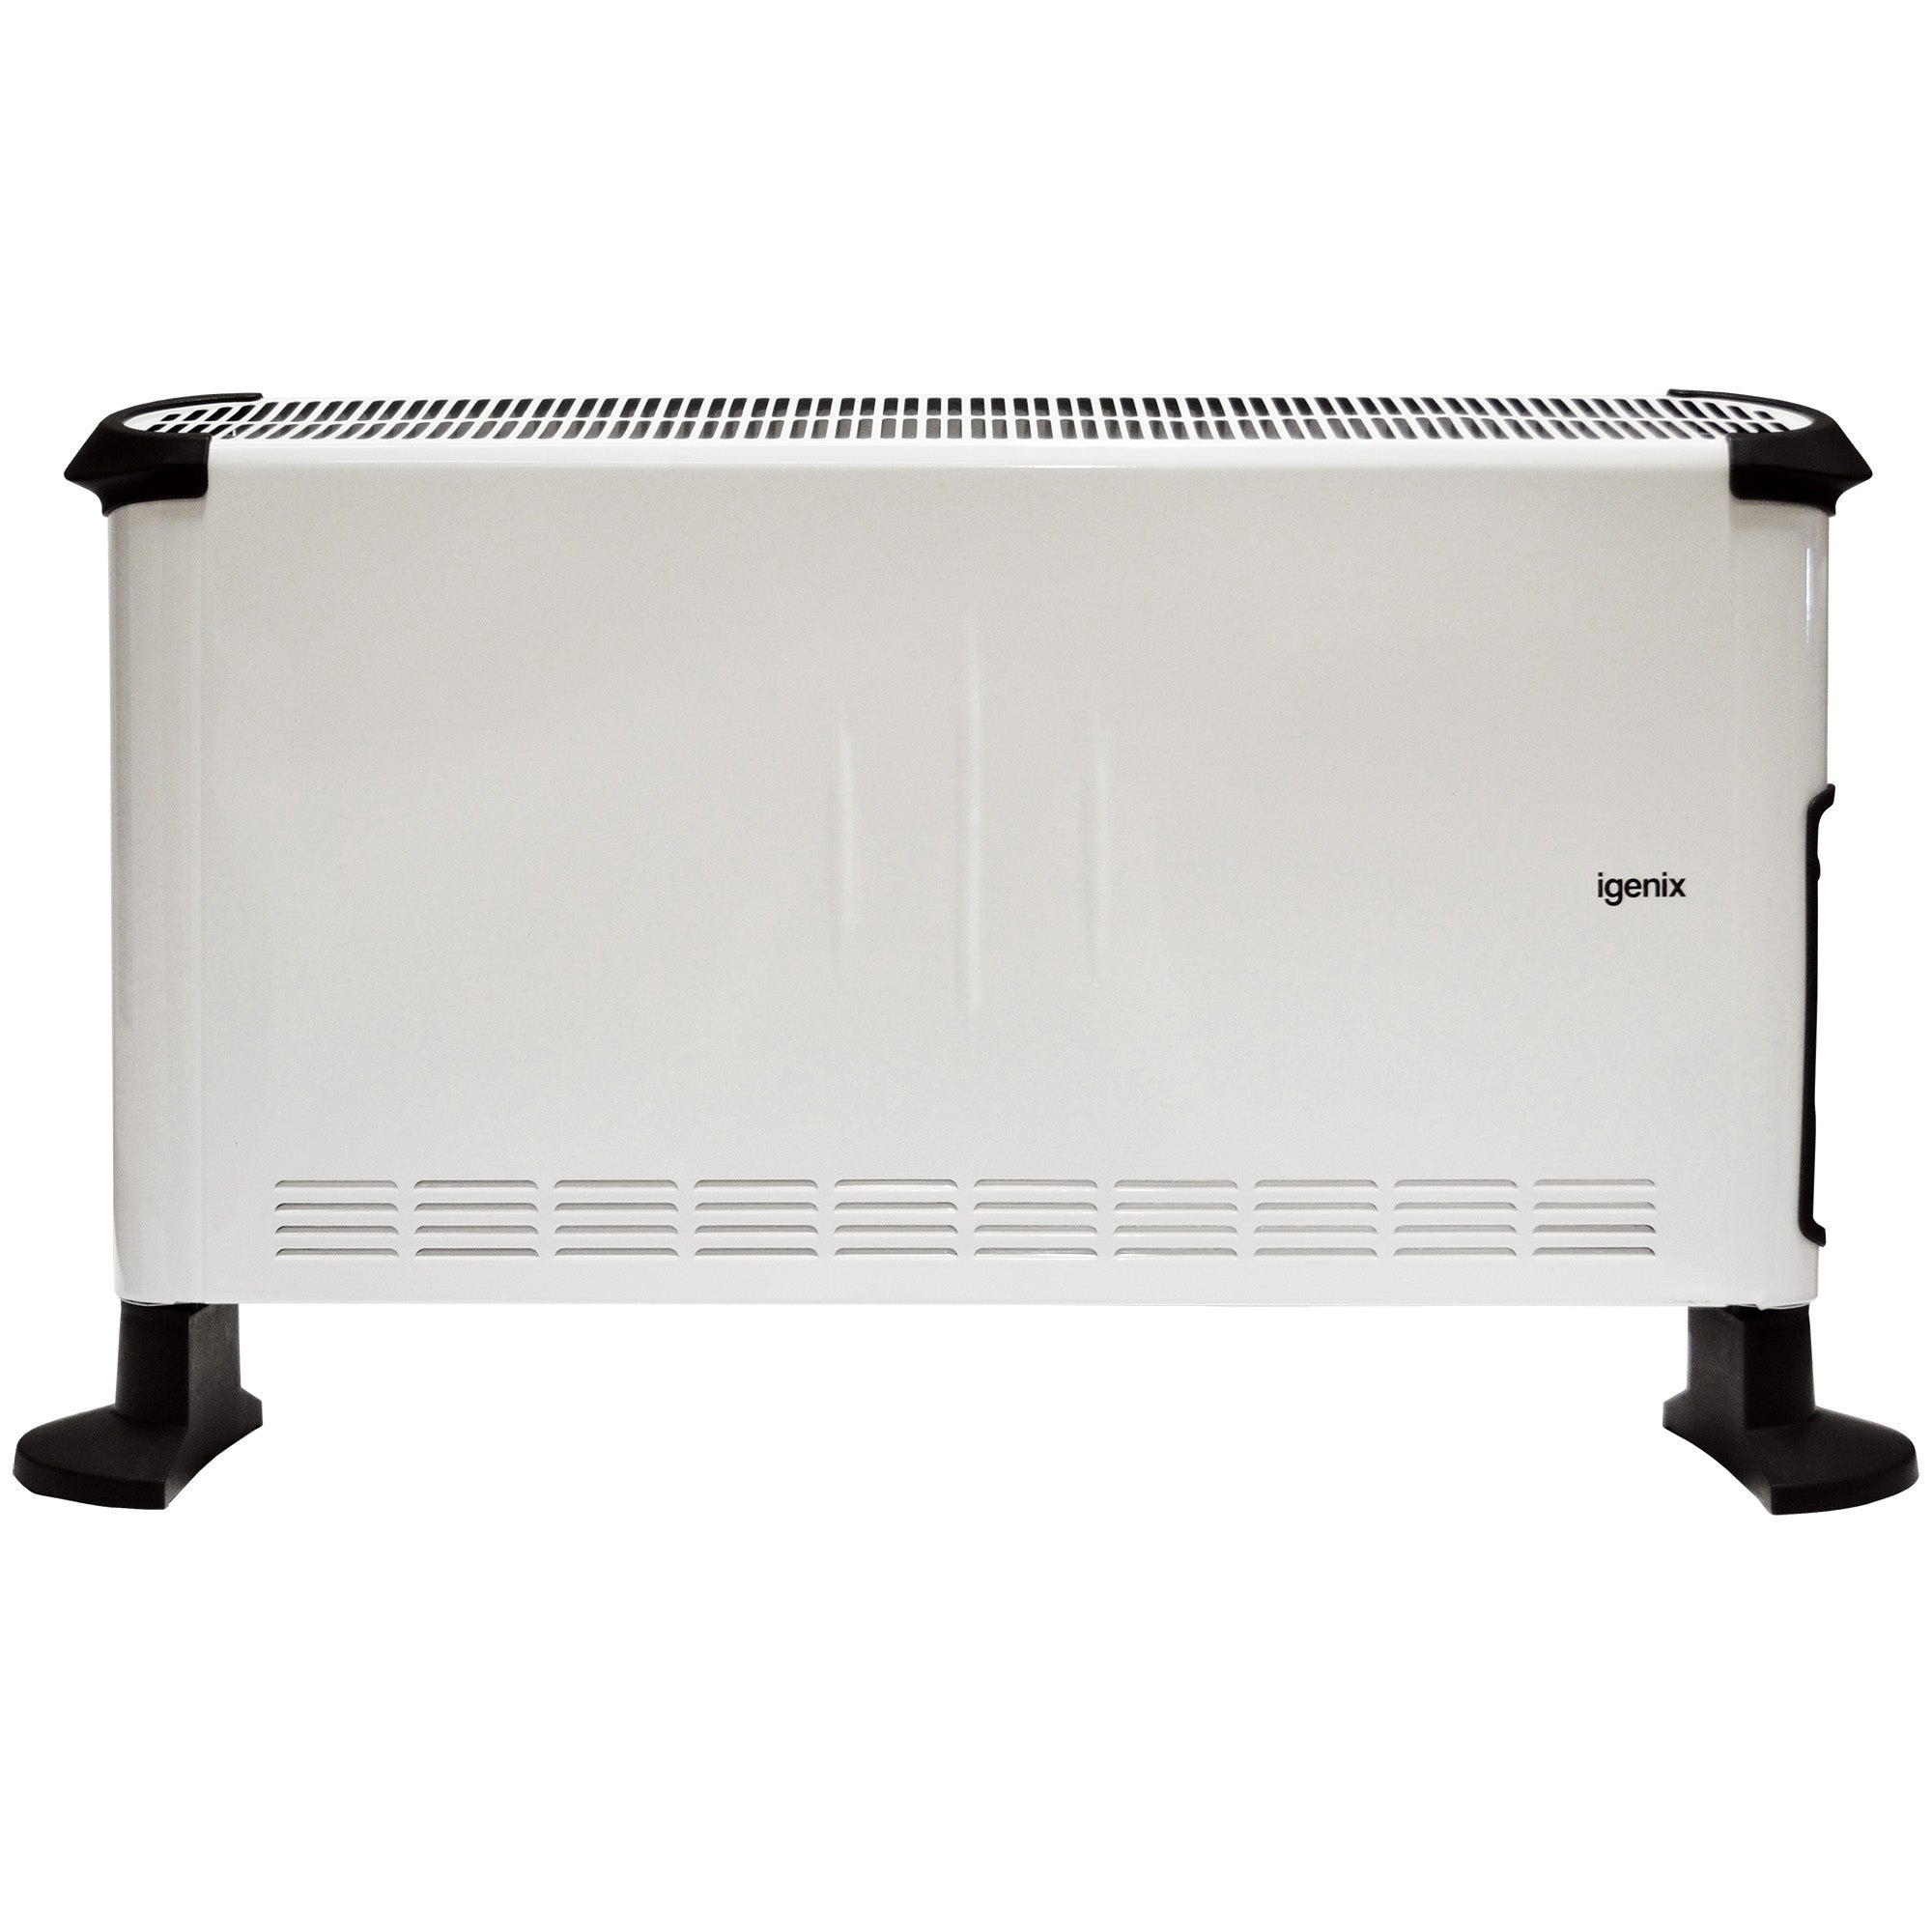 Portable Convector Heater, 3 Heat Settings, 3000W